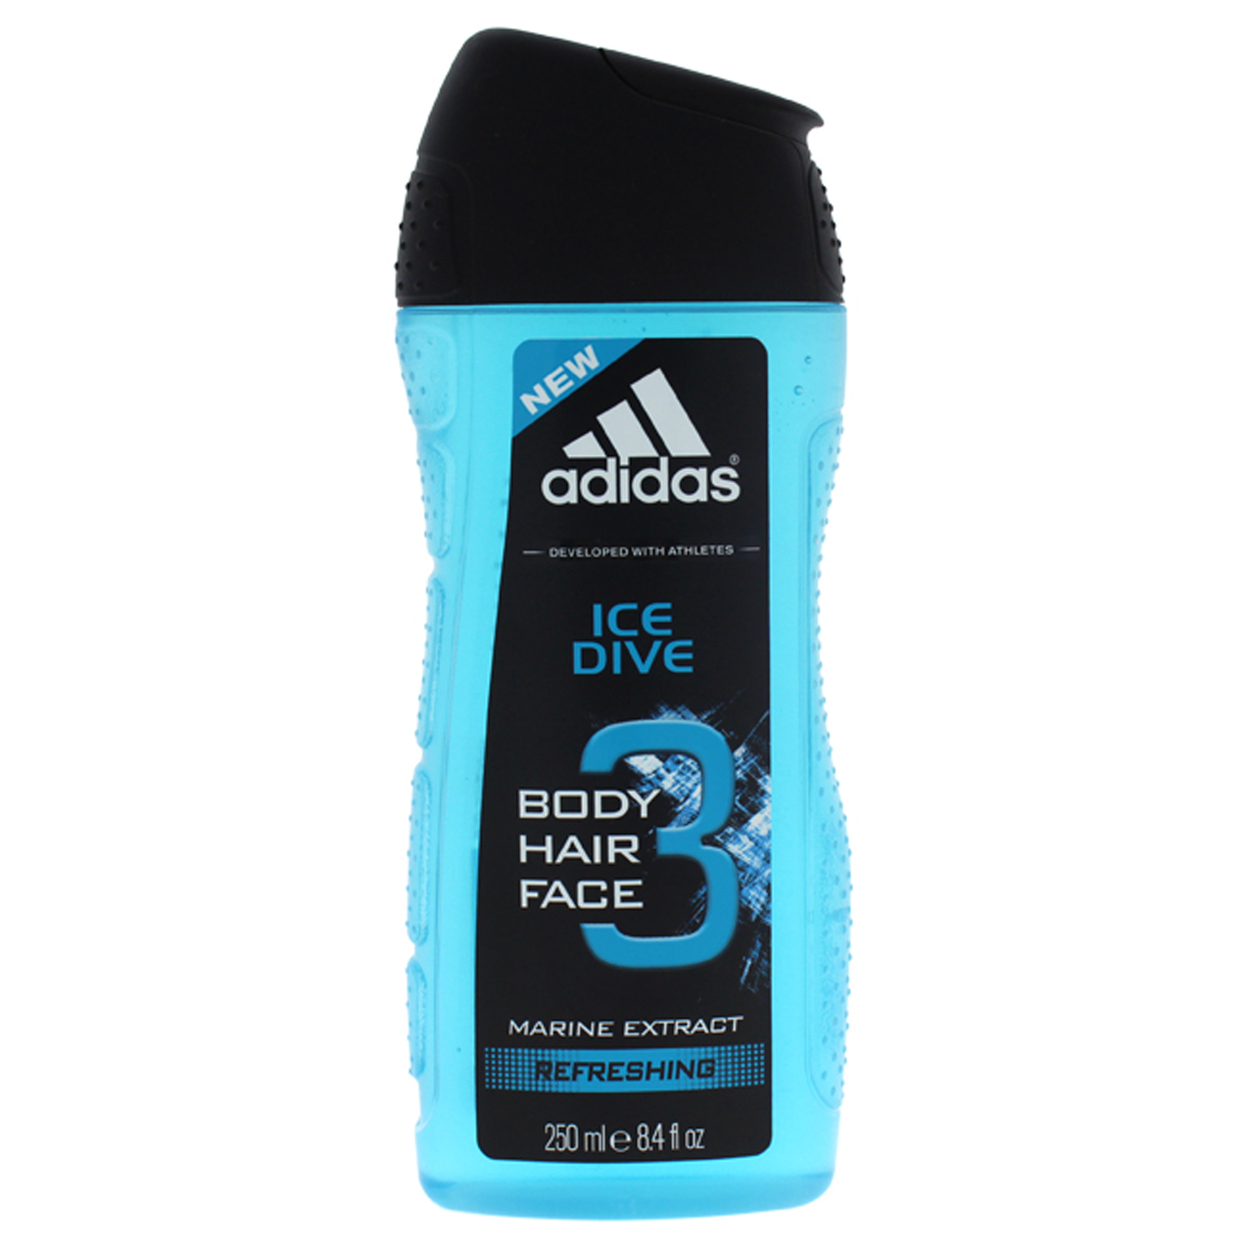 Adidas Ice Dive 3 Hair & Body Wash Marine Extract Refreshing Shower Gel 8.4 Oz